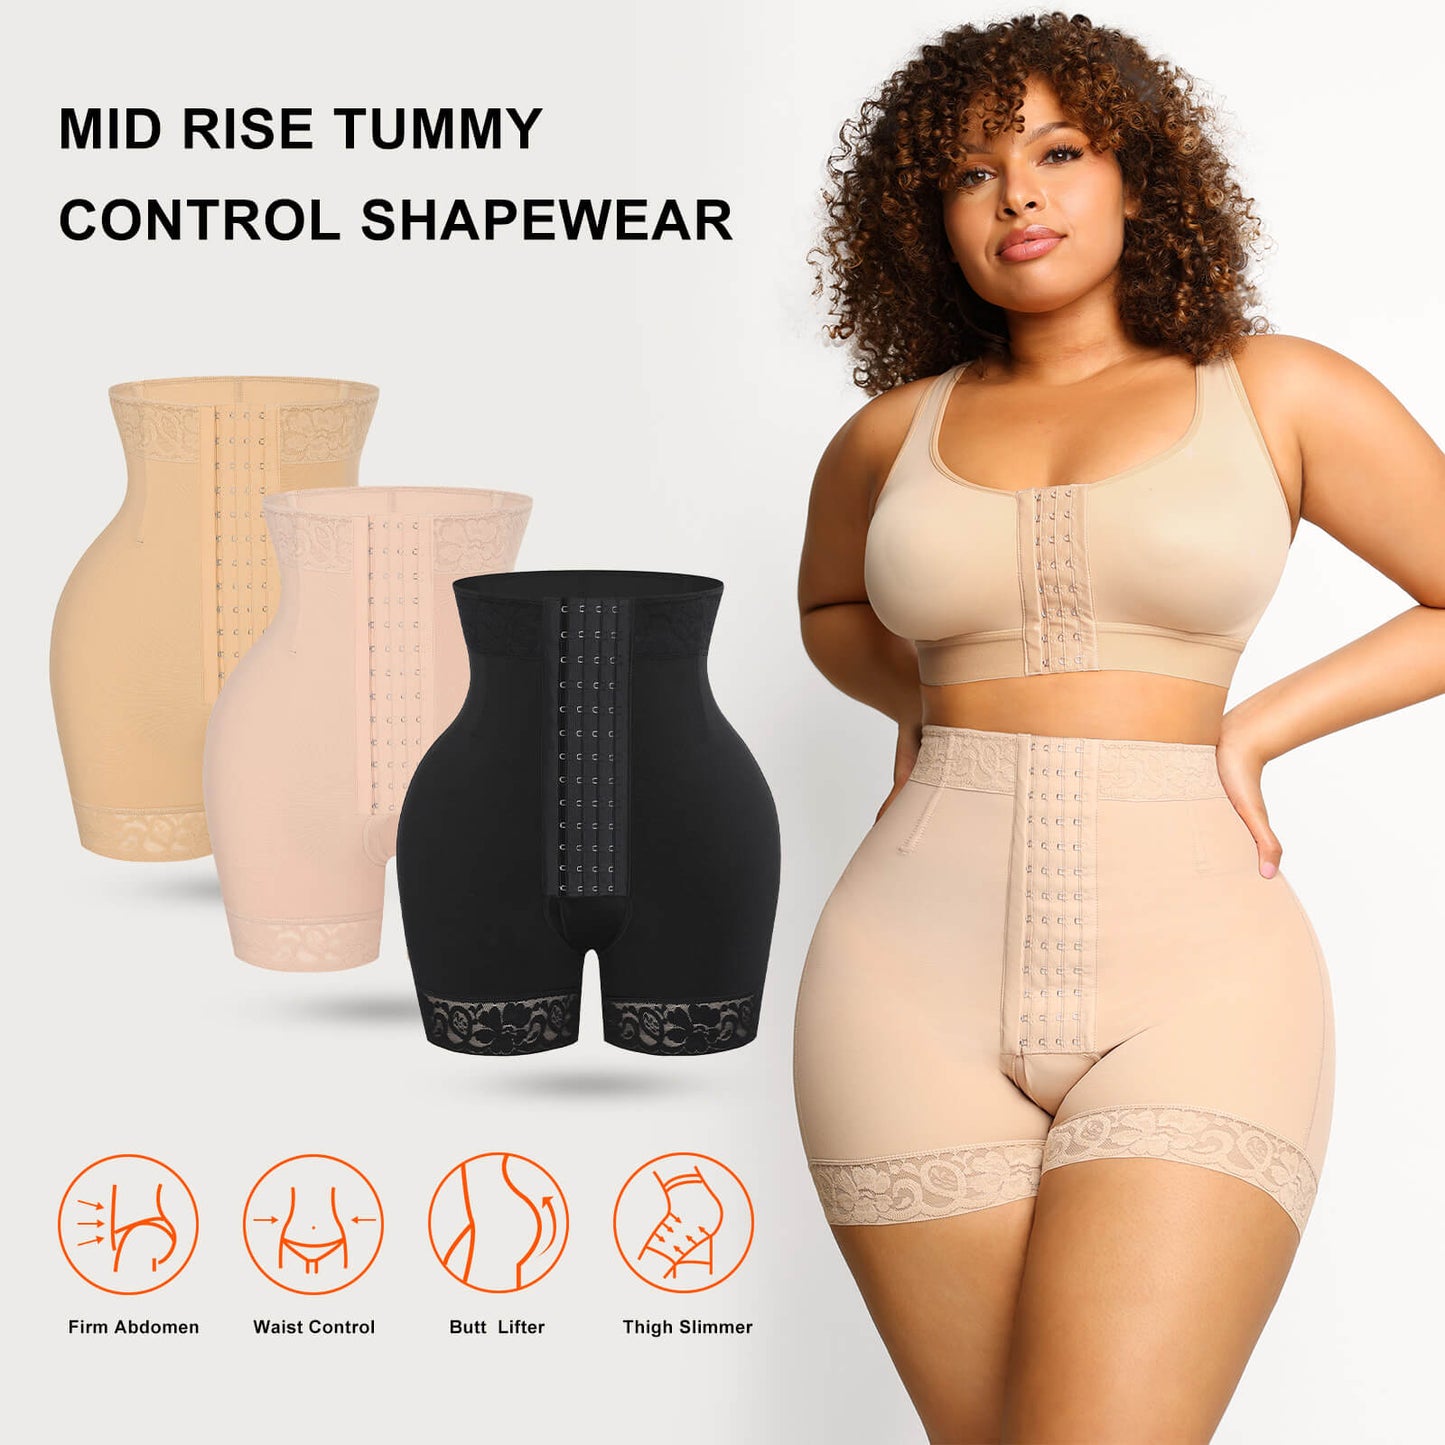 Mid-rise tummy control shaper